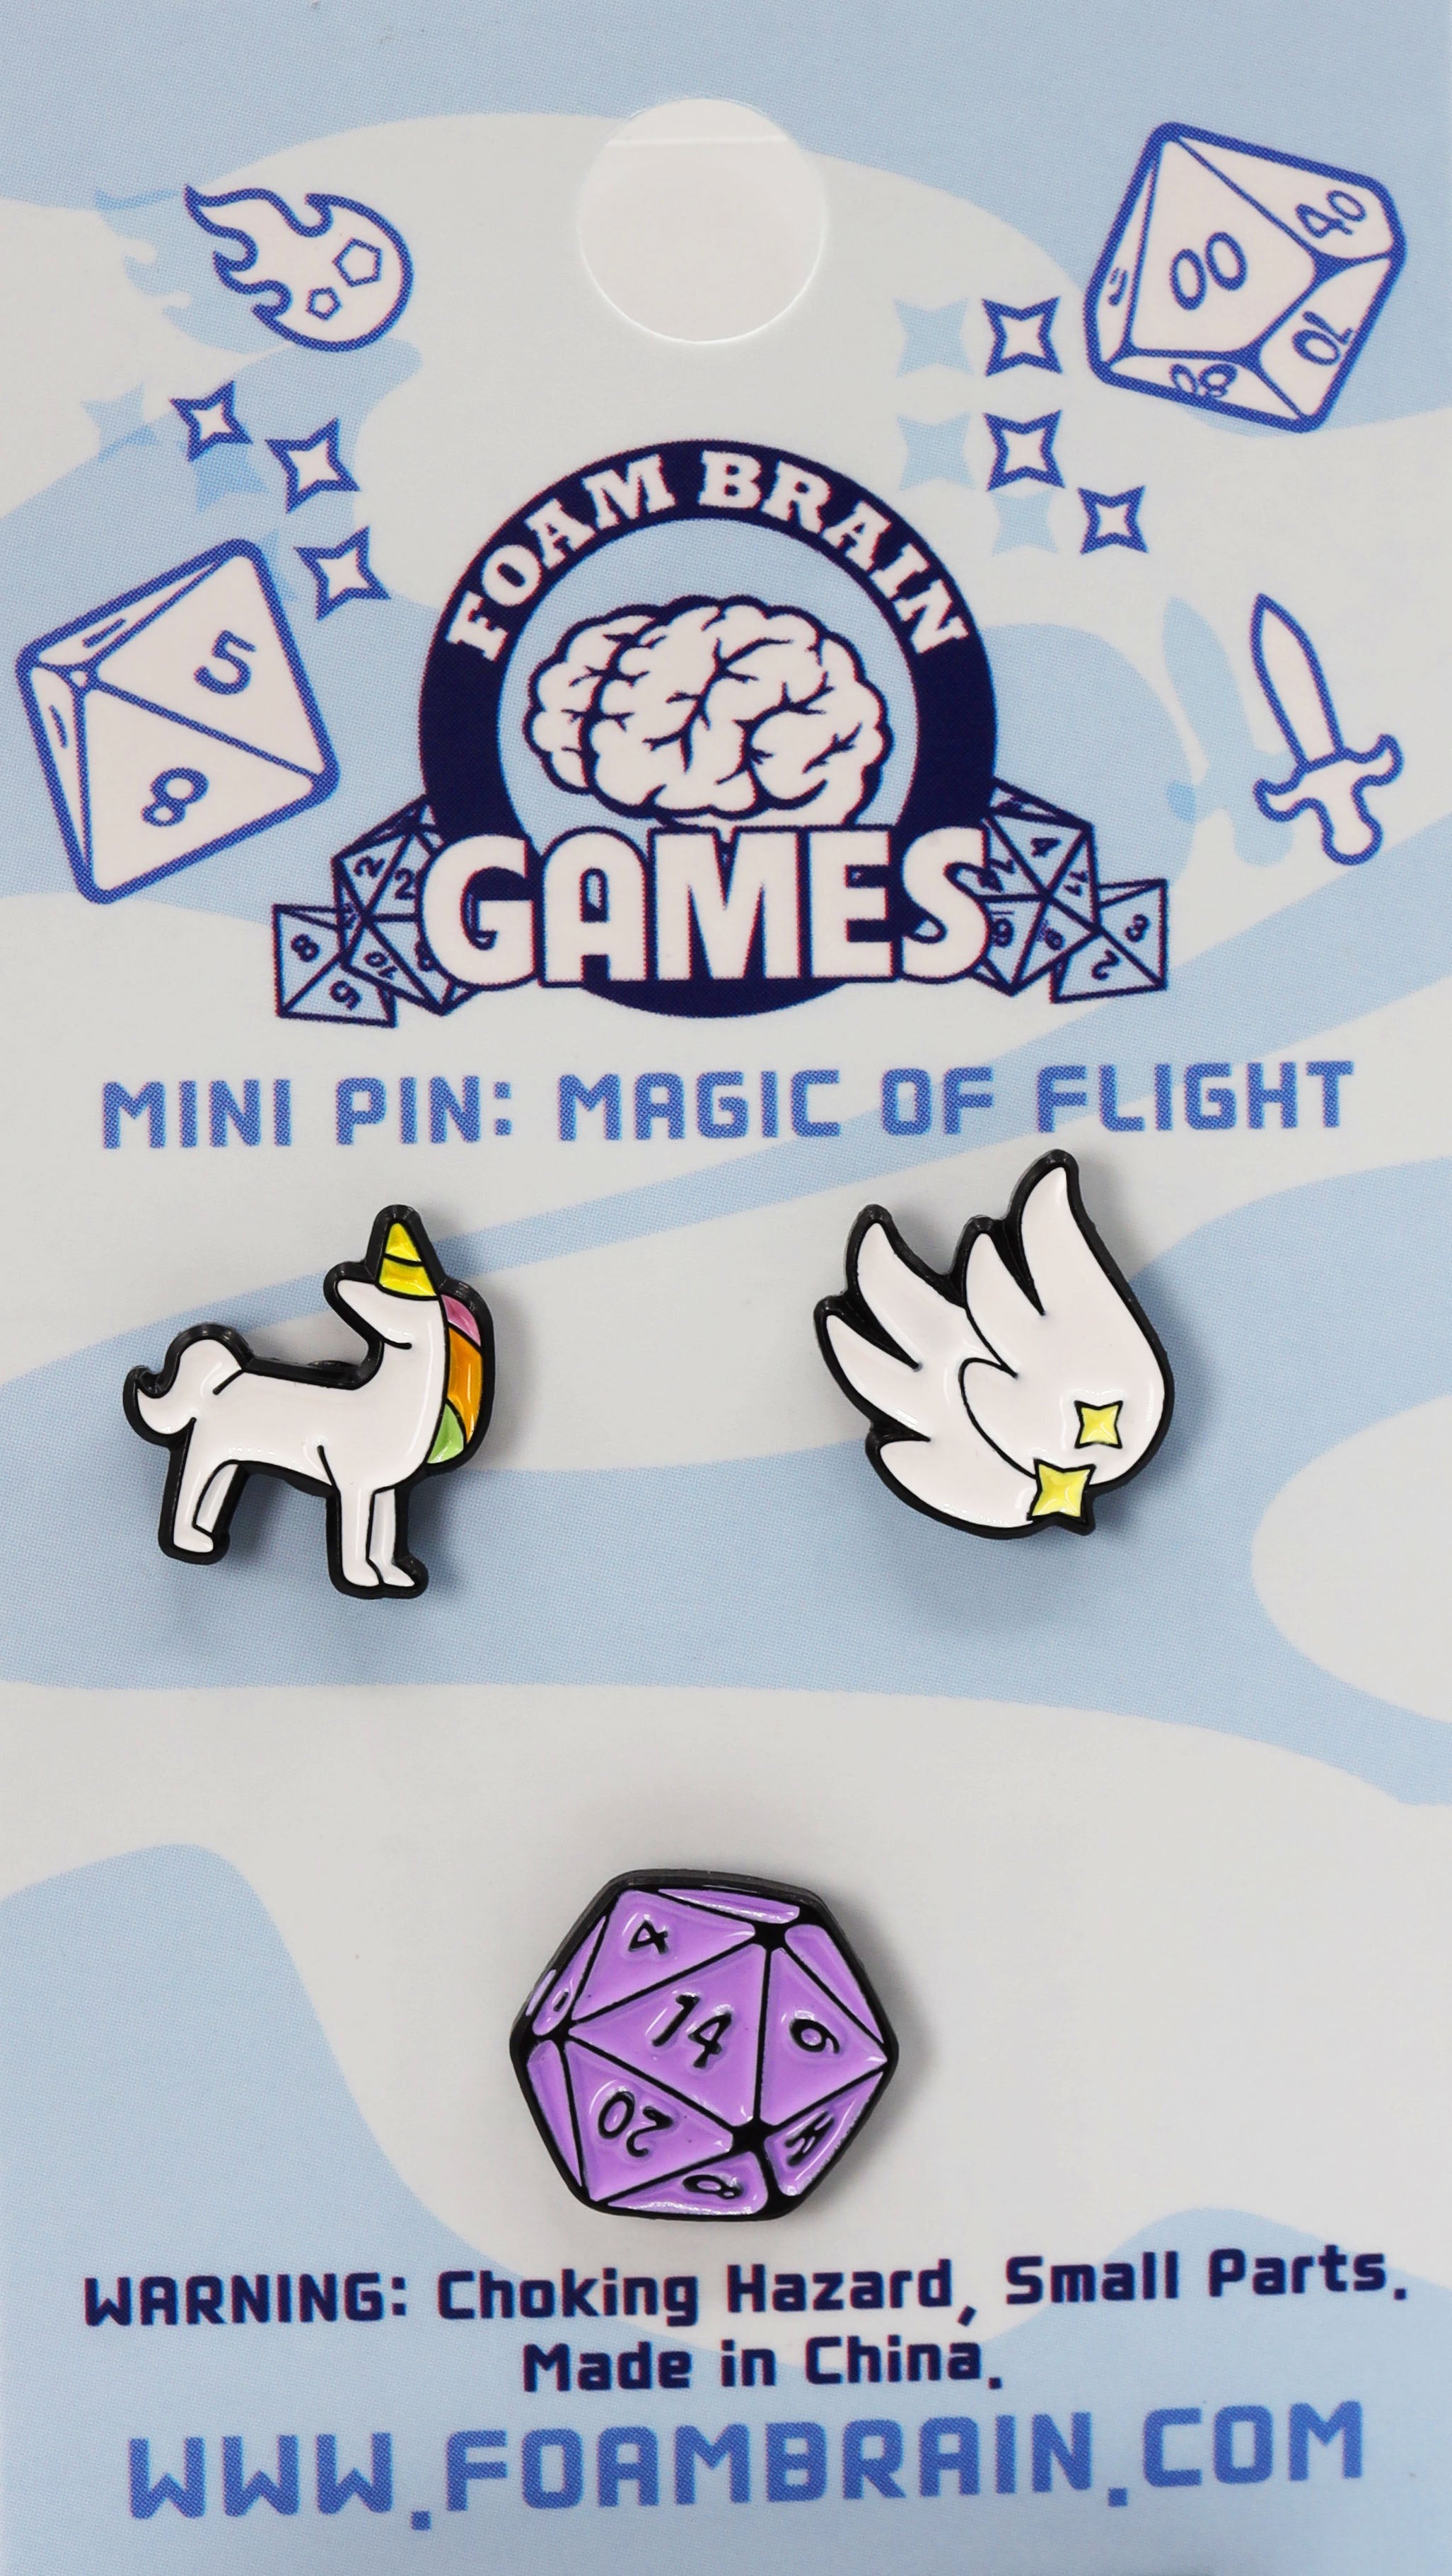 Mini Pins: Magic of Flight Enamel Pin Foam Brain Games | D20 Games